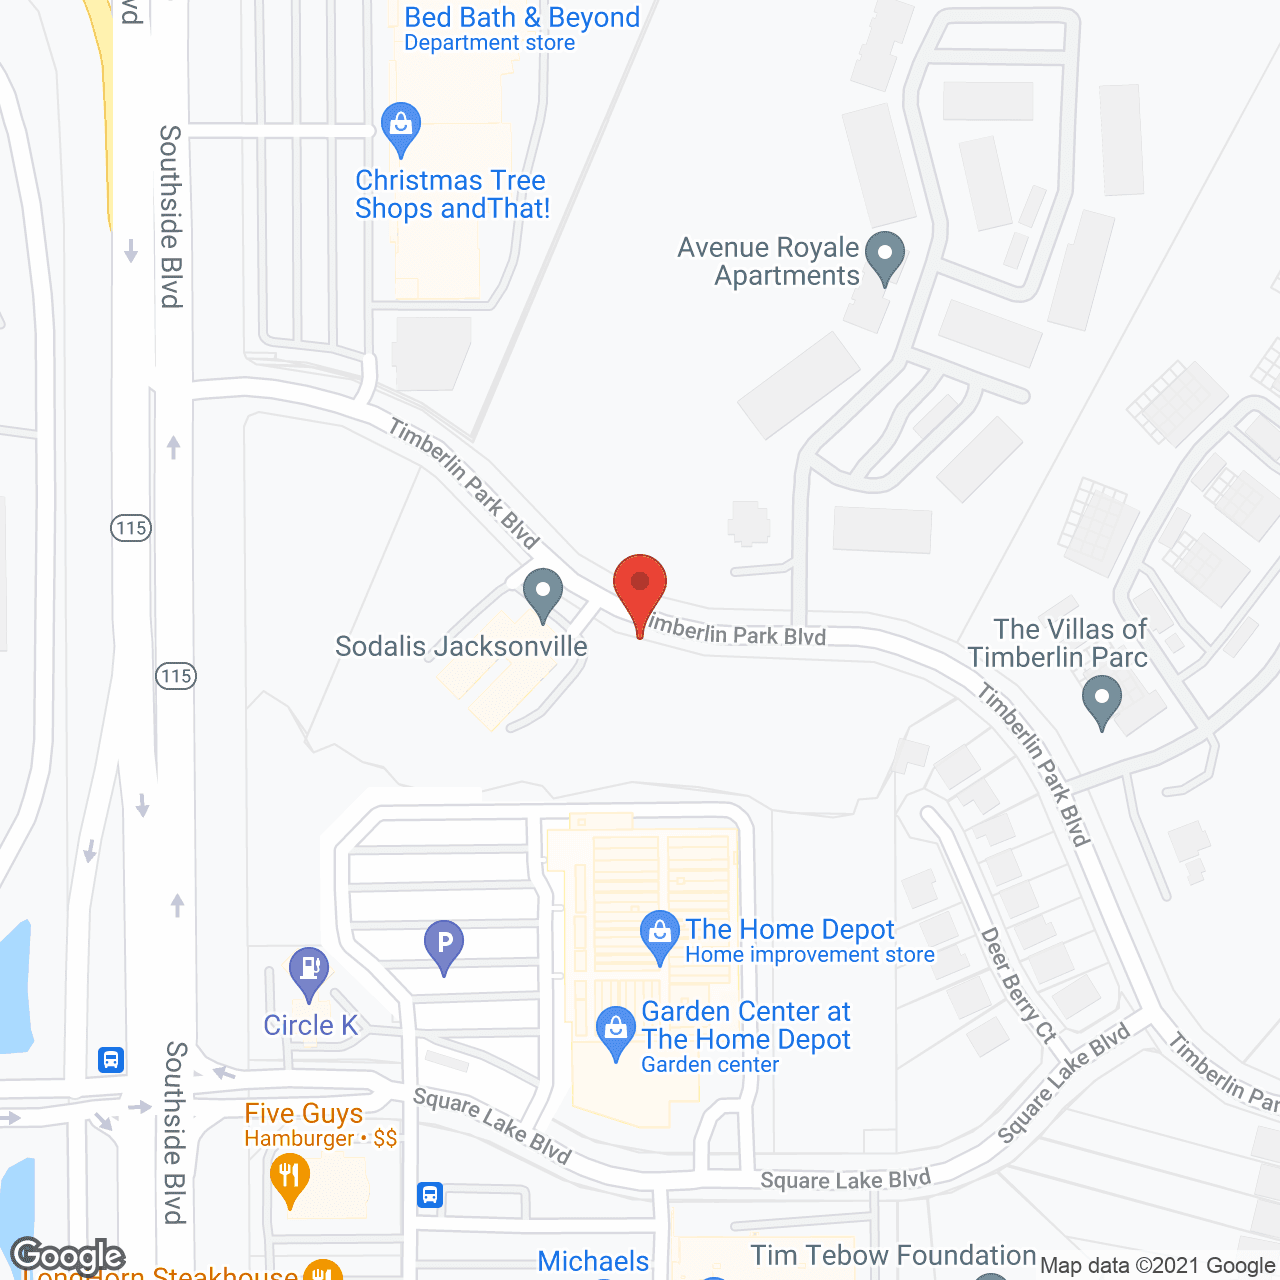 Sodalis Jacksonville in google map